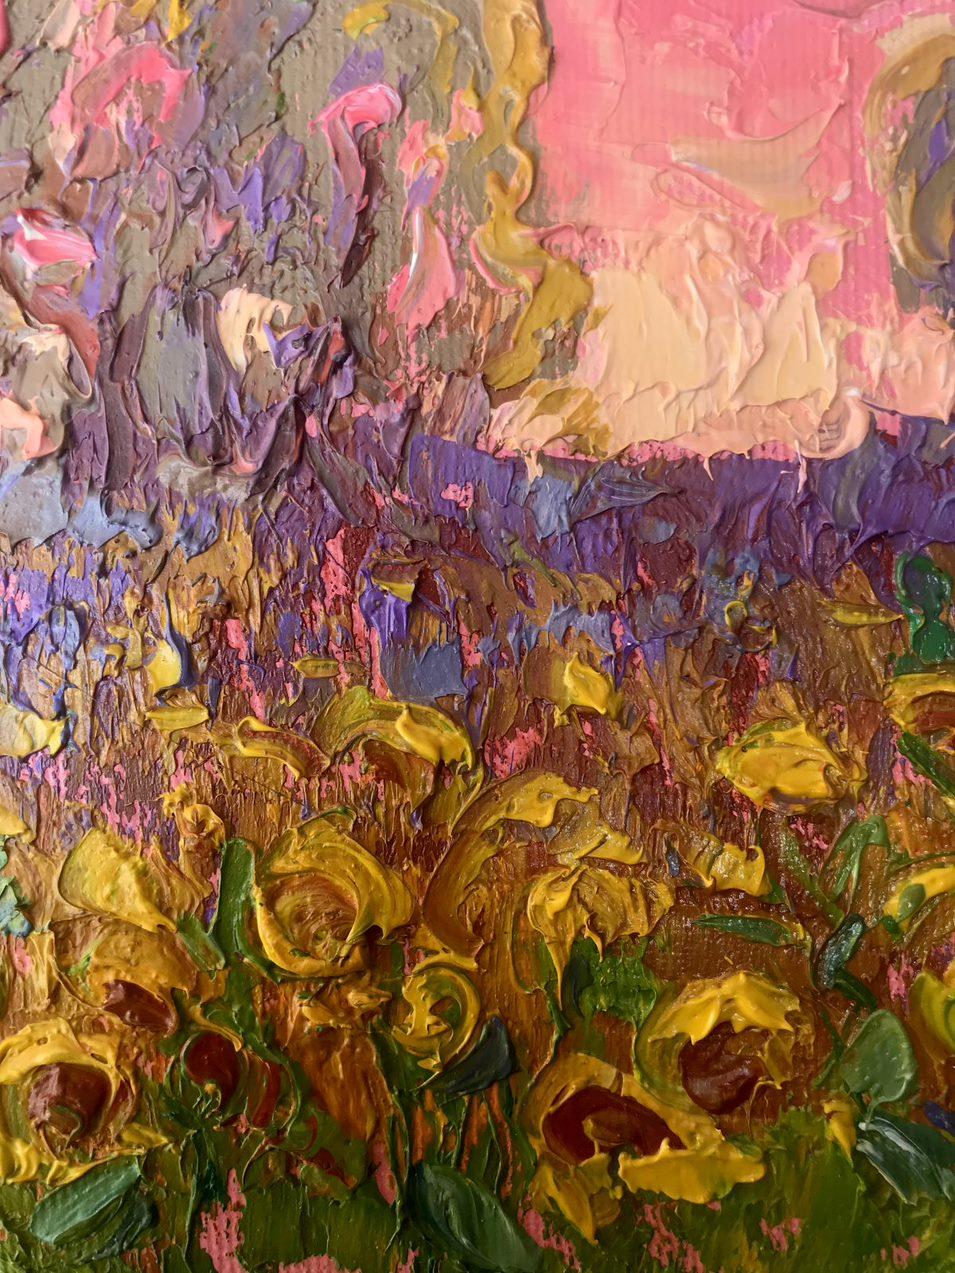 Artist: Oksana Kalenyuk 
Work: Original oil painting, handmade artwork, one of a kind 
Medium: Oil on canvas 
Year: 2023
Style: Impressionism
Title: Sunflower Field
Size: 6